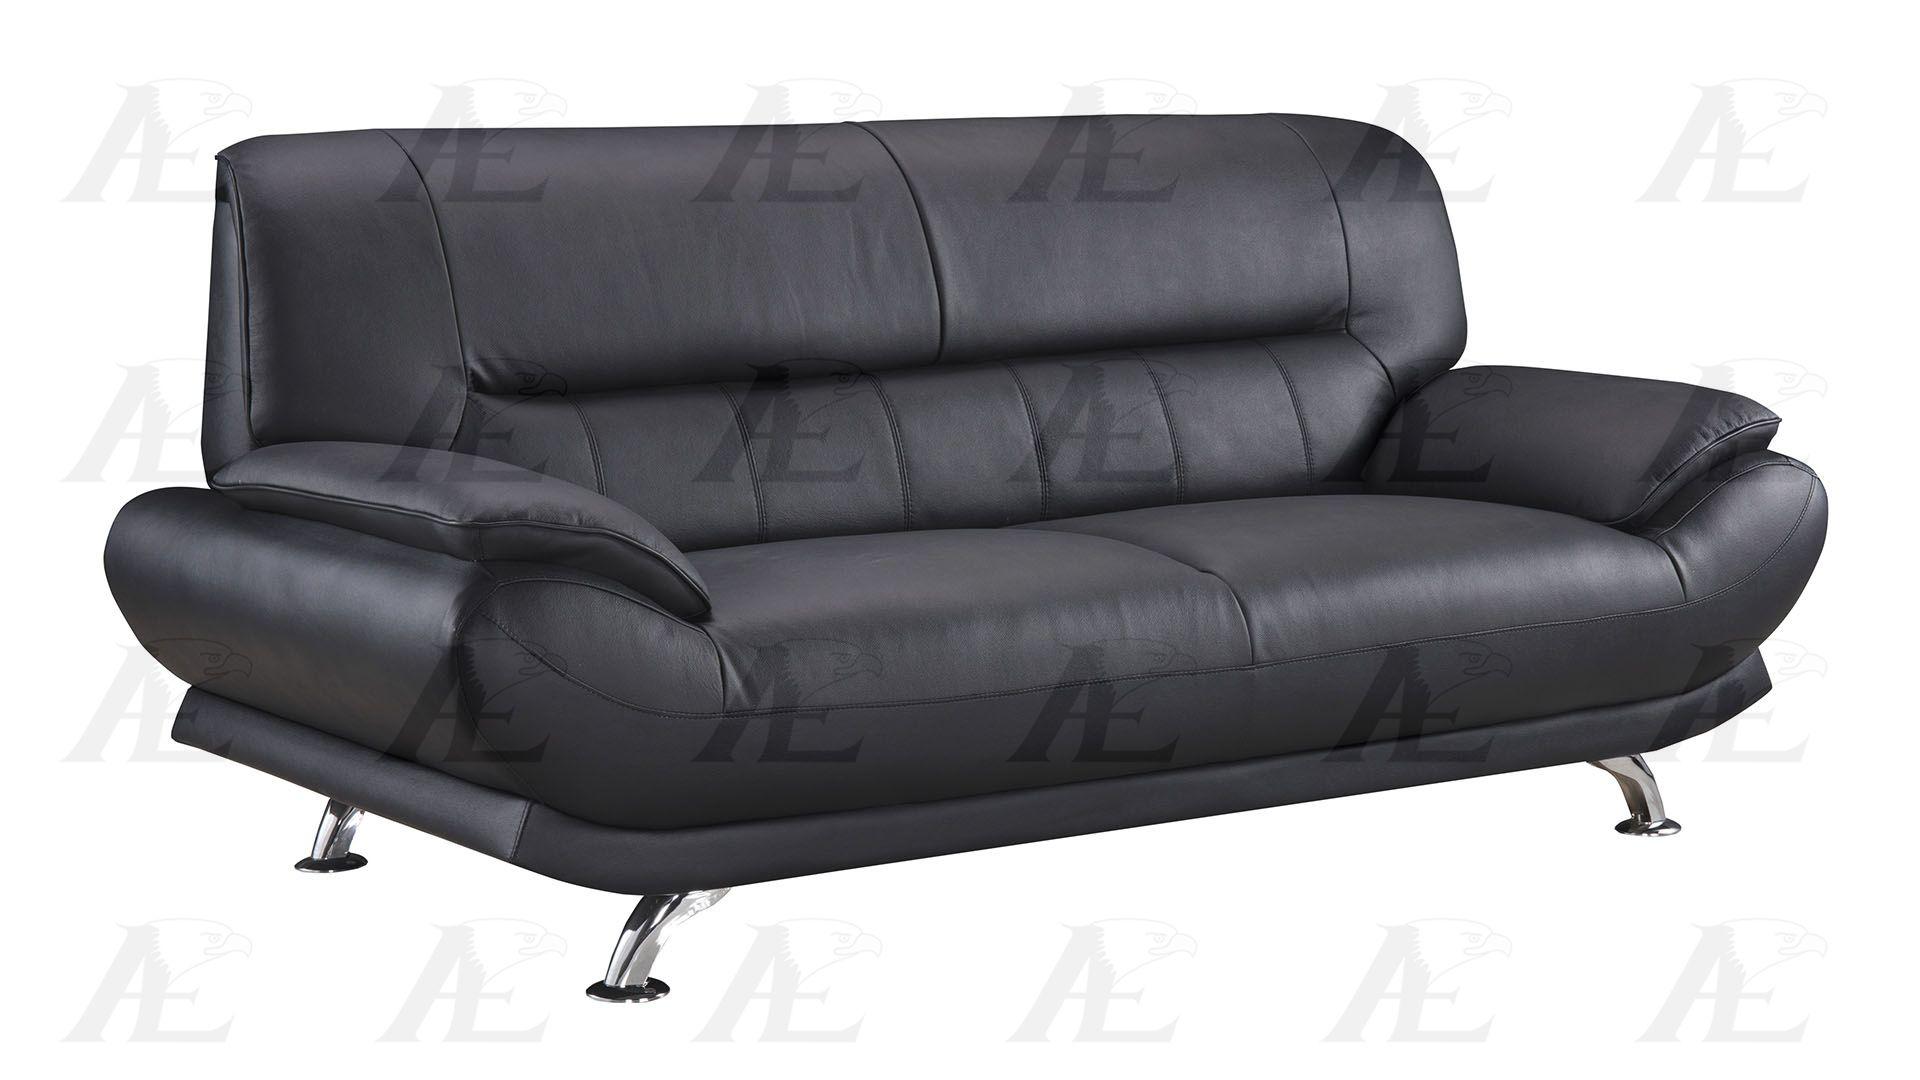 

    
American Eagle EK-B118 Black Genuine Leather Living Room Sofa Set 2pcs in Modern Style
